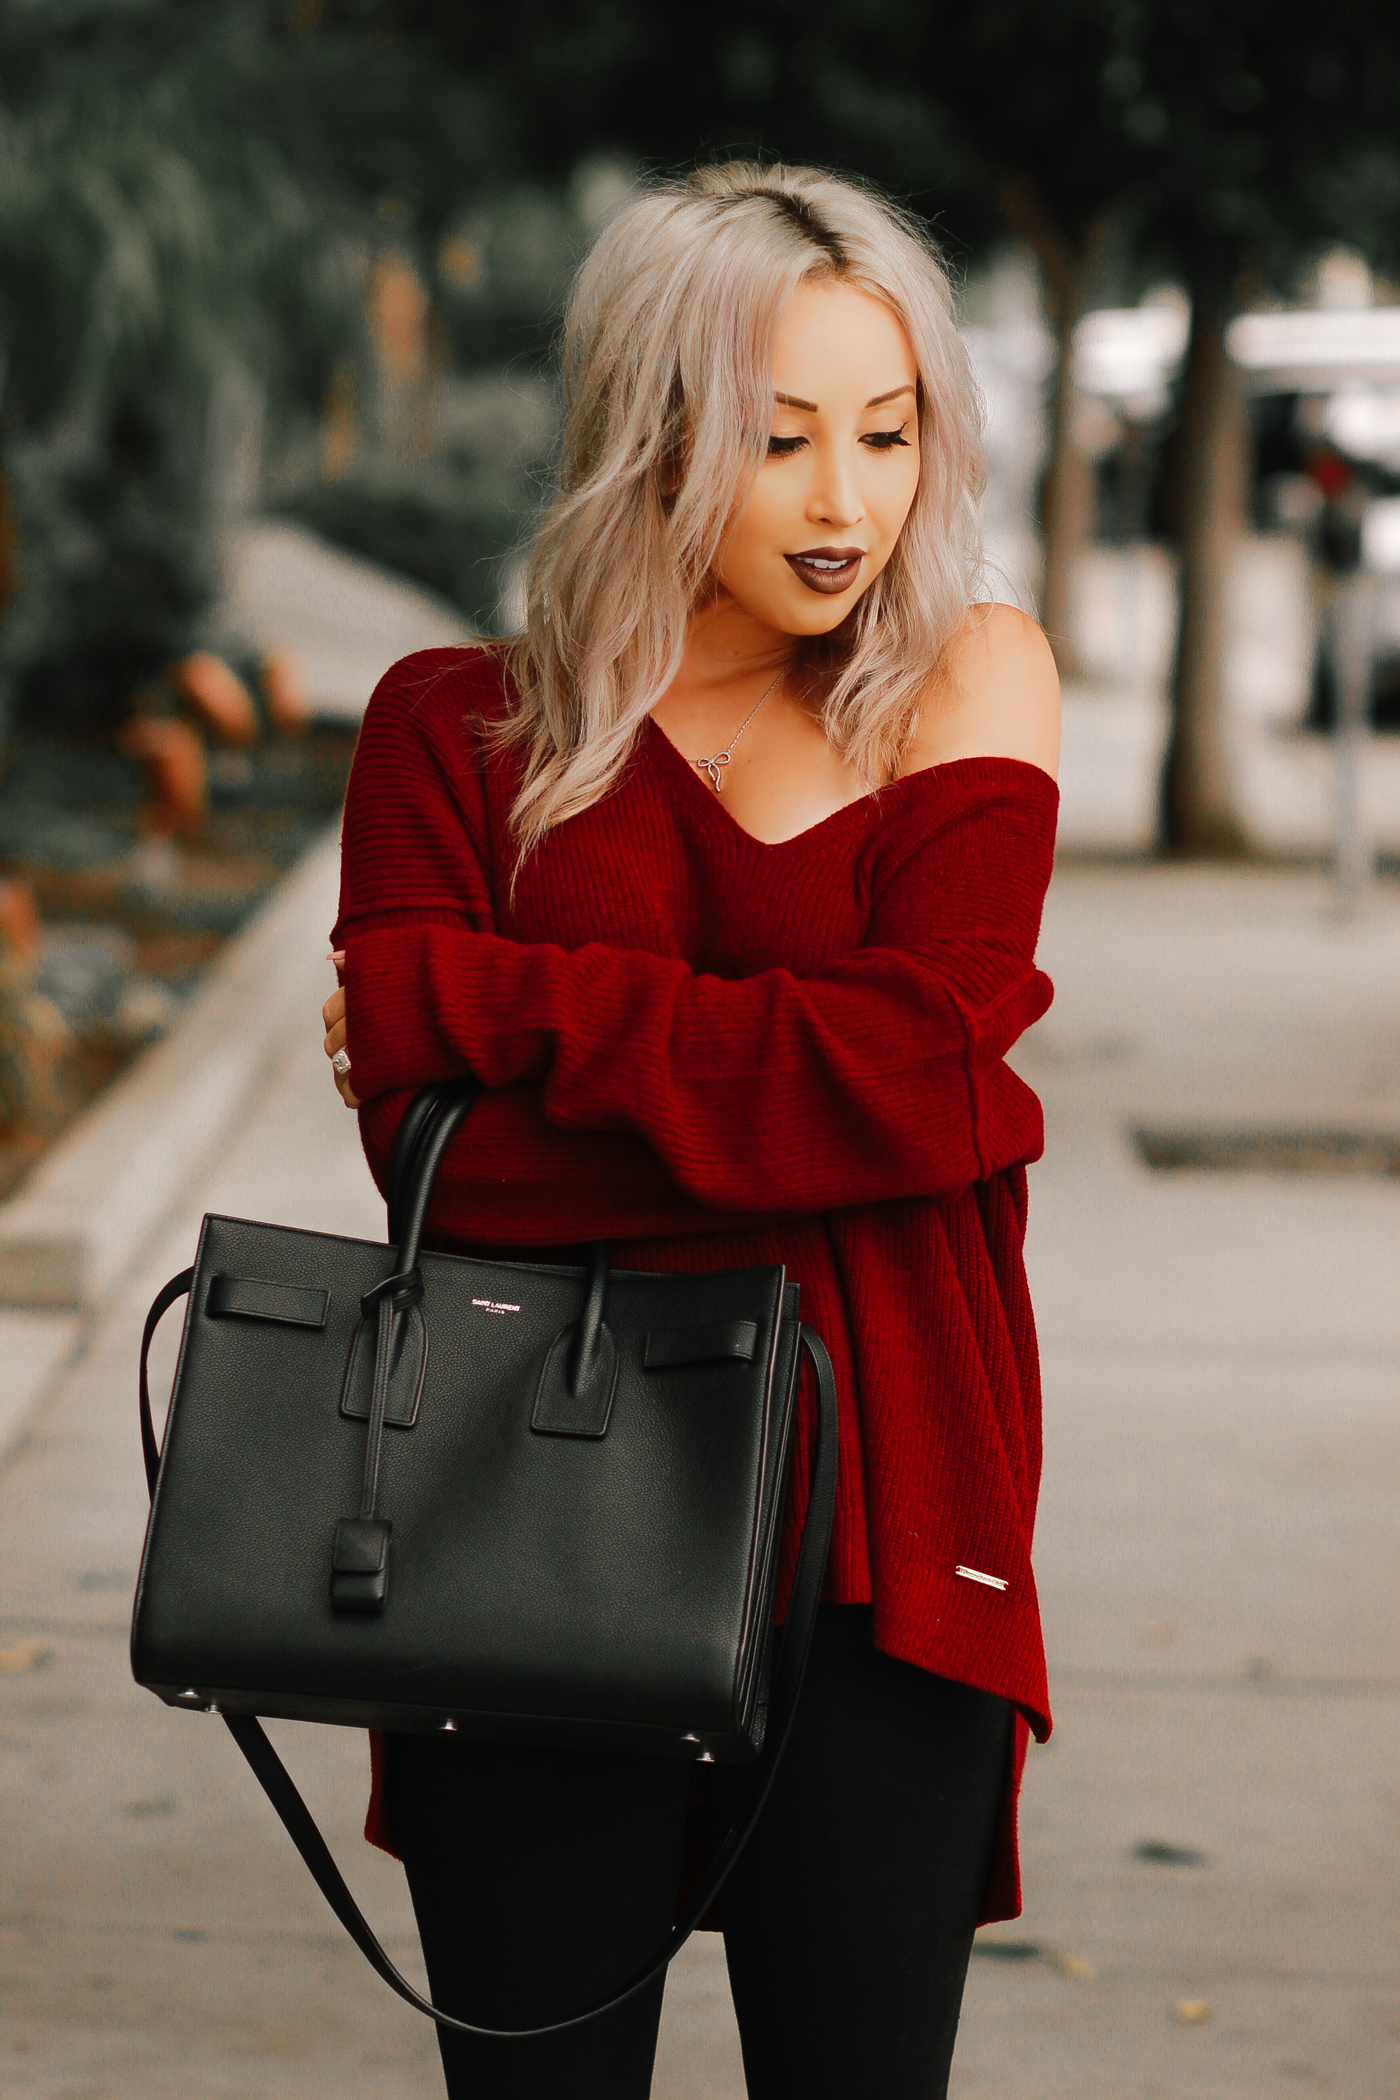 Blondie in the City | Burgundy Off The Shoulder Sweater | Black Saint Laurent Bag